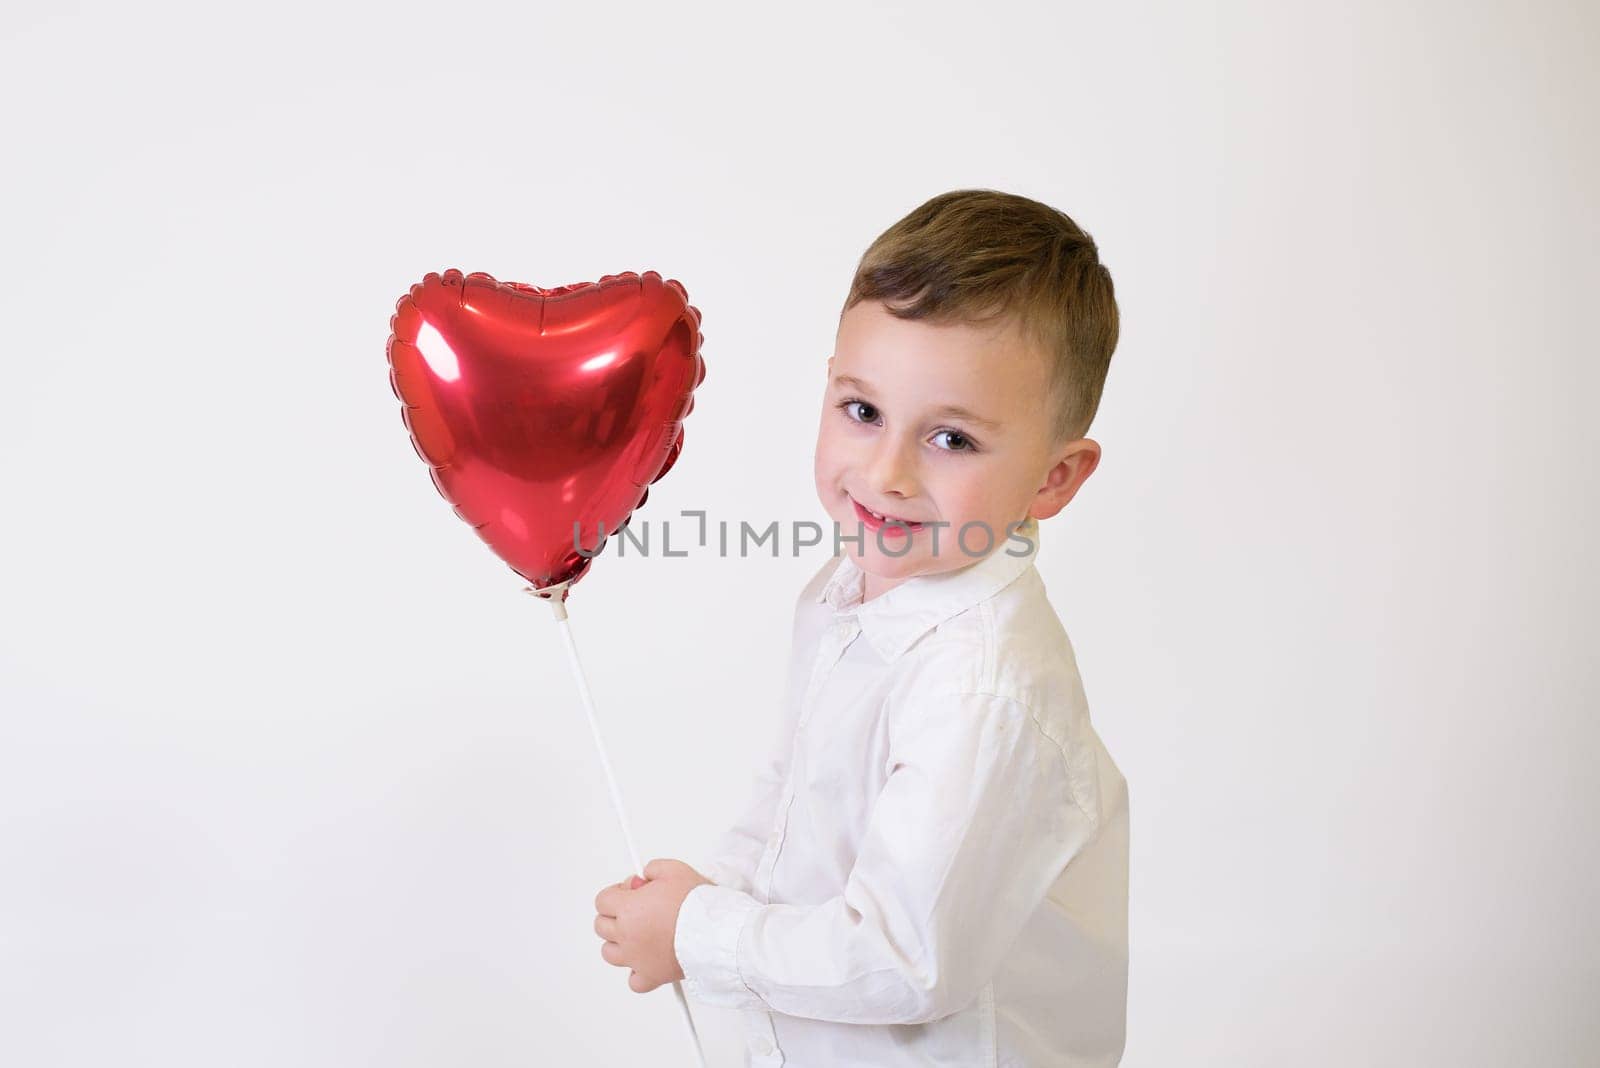 Little children with air balloons on white background. Valentine's Day Celebration by jcdiazhidalgo